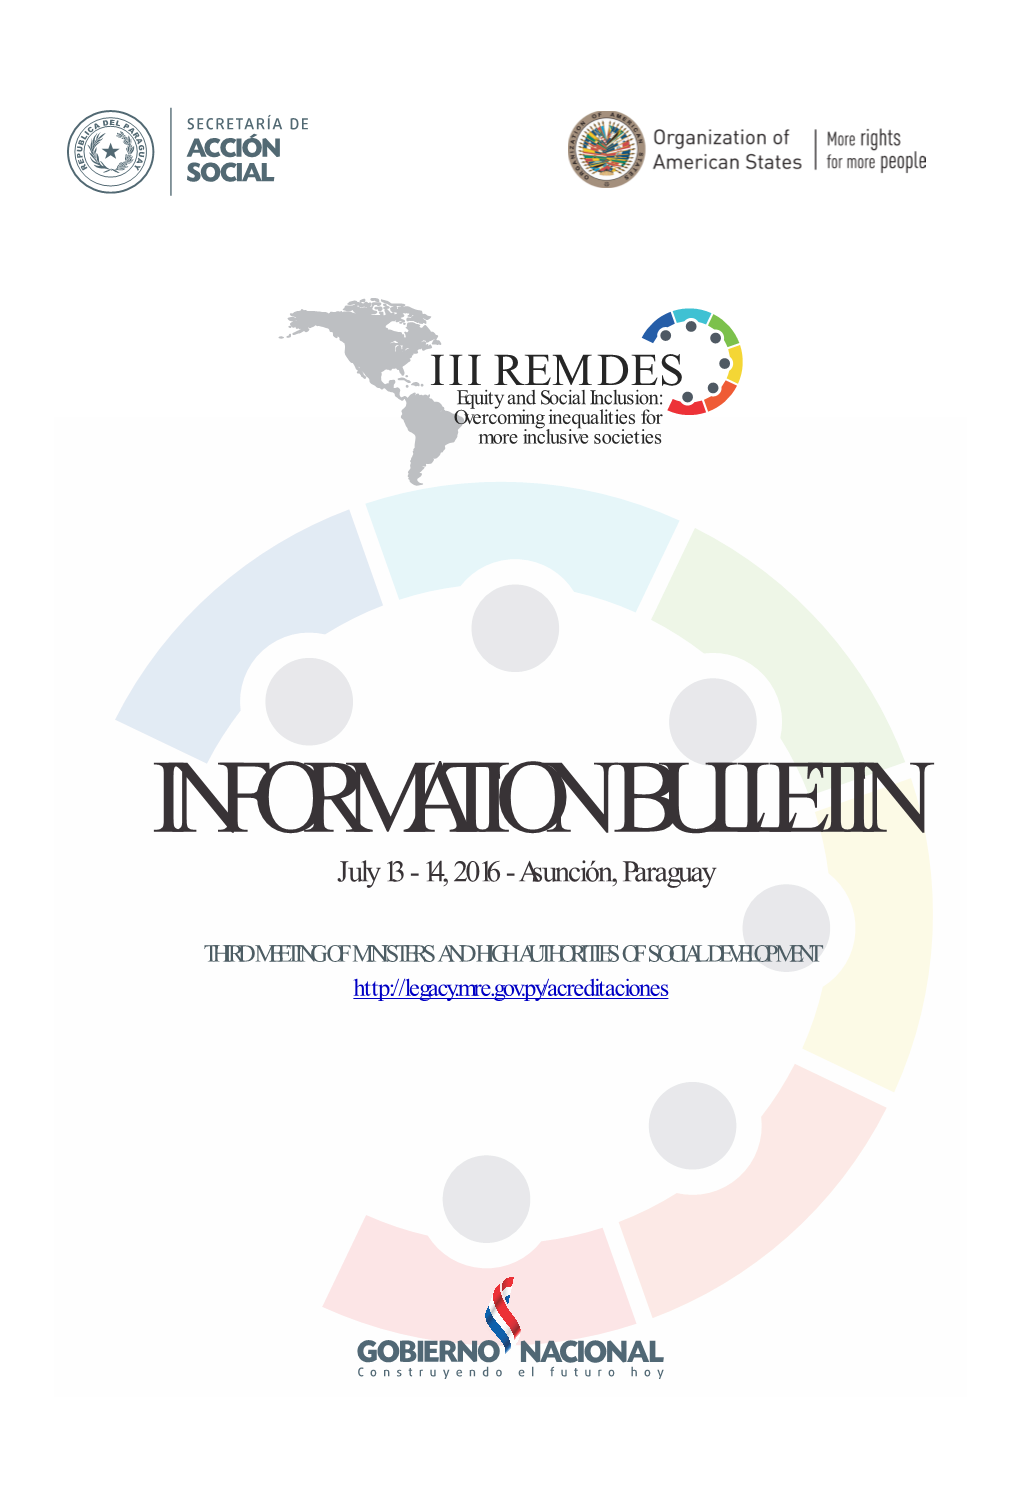 INFORMATION BULLETIN July 13 - 14, 2016 - Asunción, Paraguay